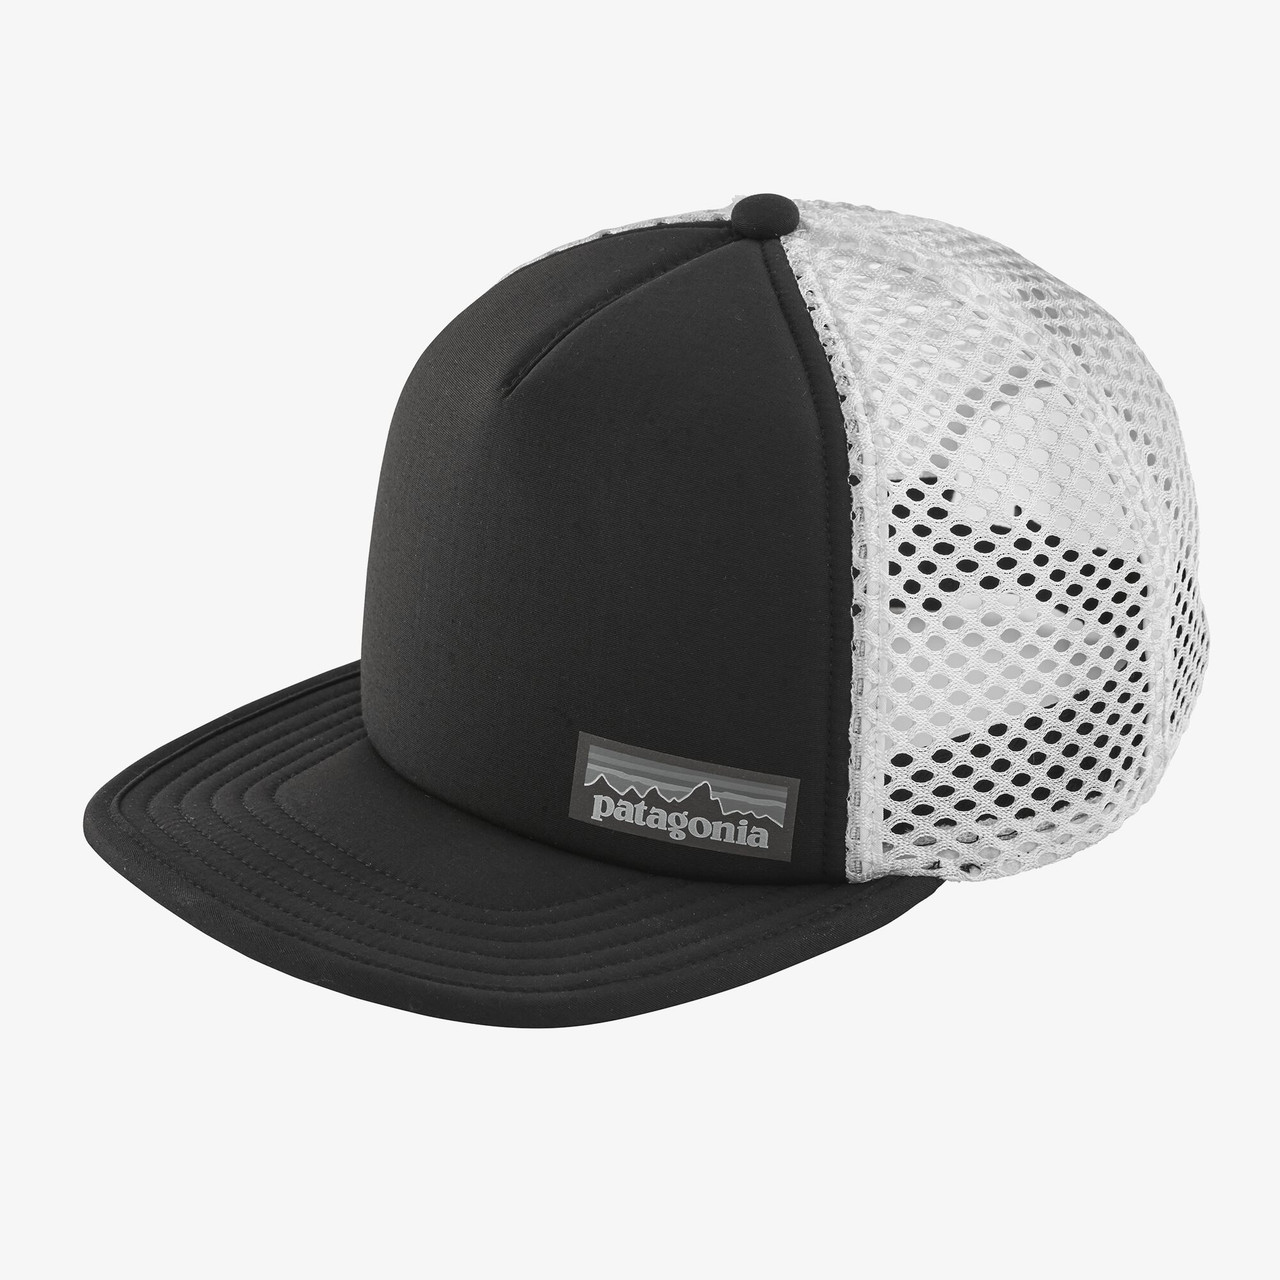 Patagonia trucker hat, Men's Fashion, Watches & Accessories, Cap